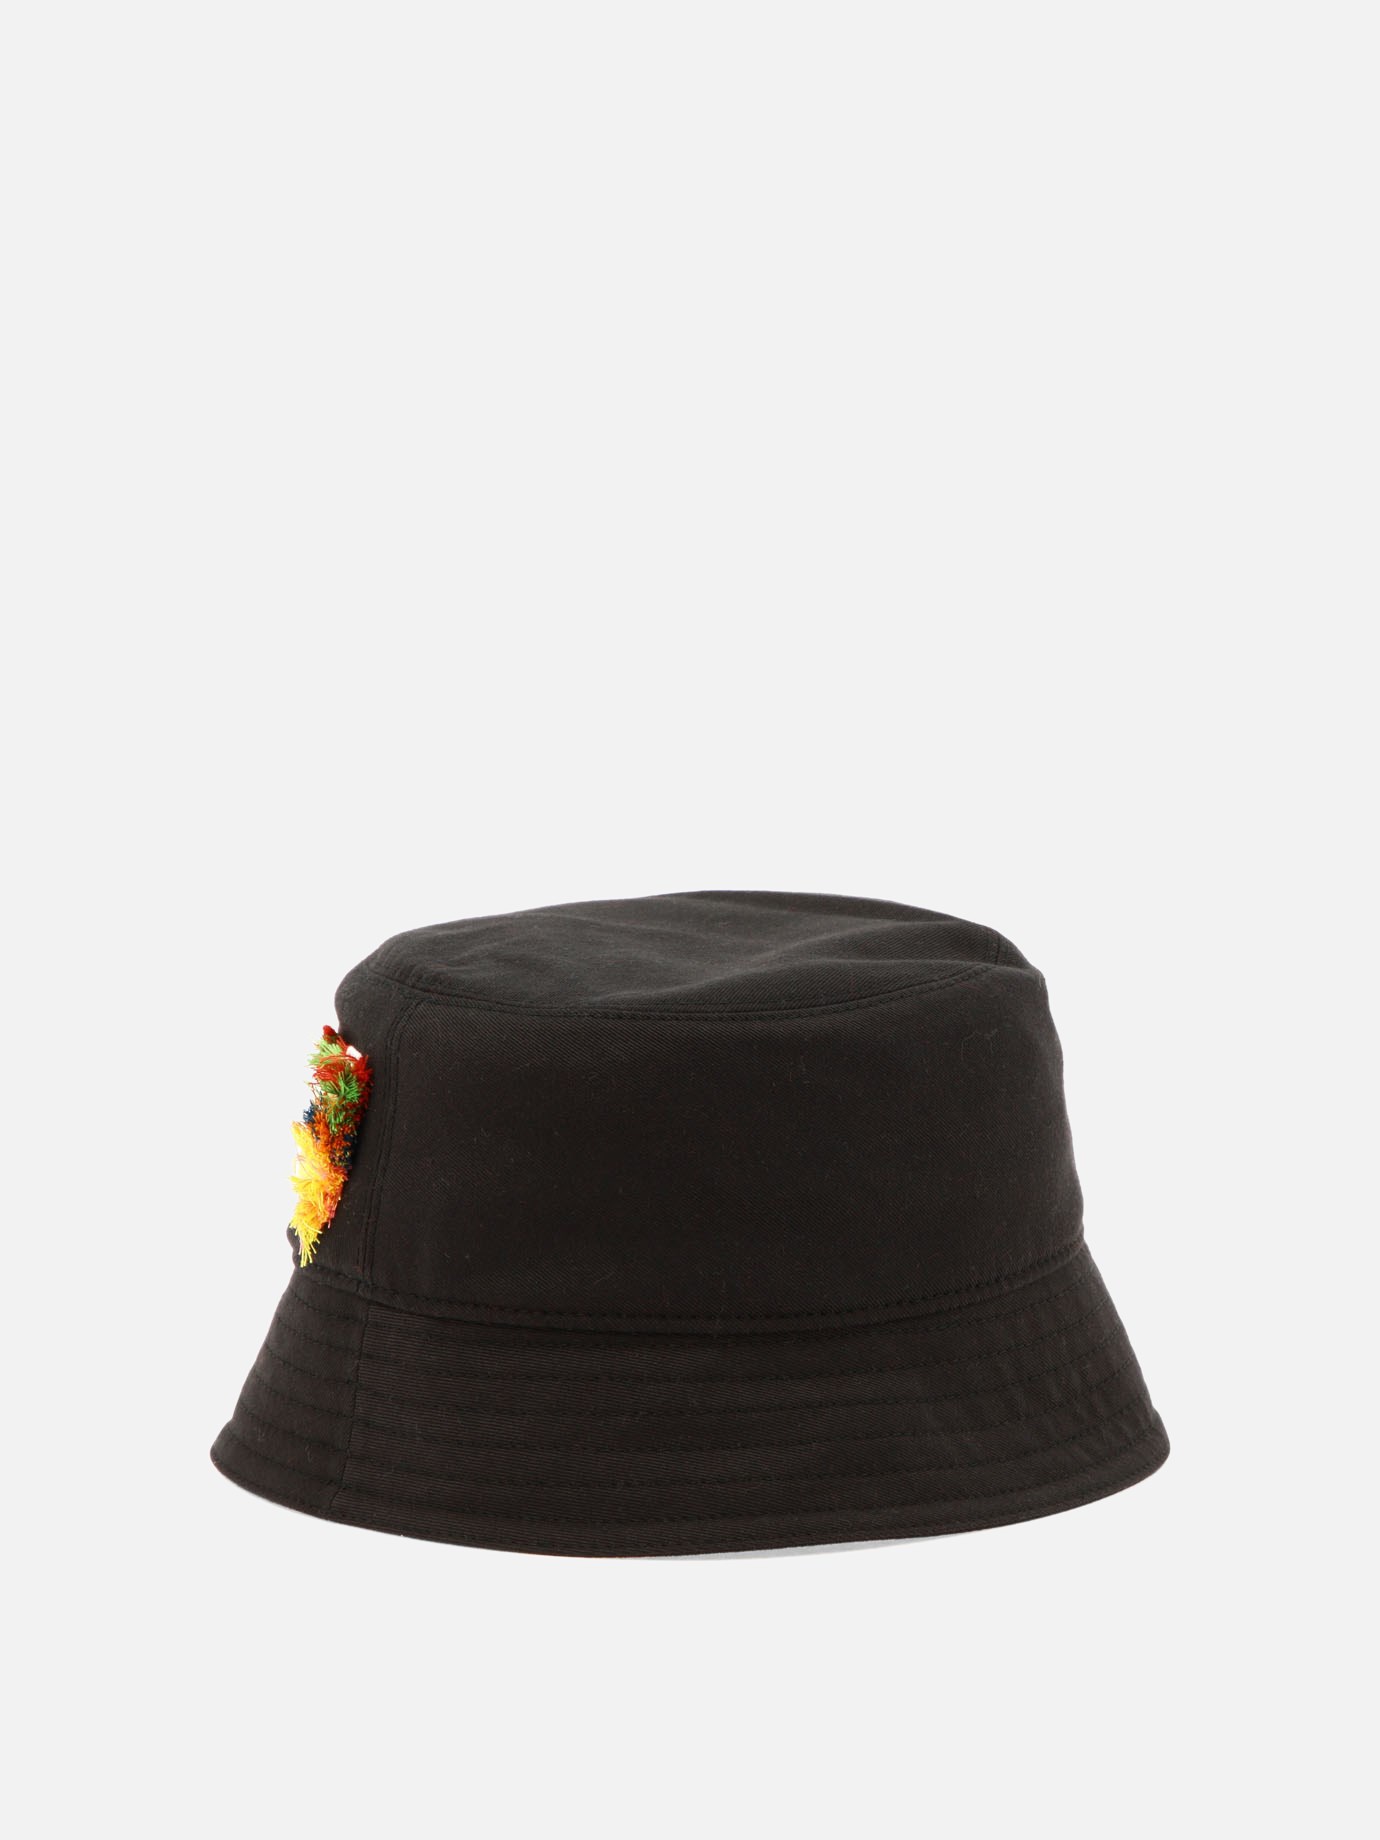  Curb  bucket hat by Lanvin